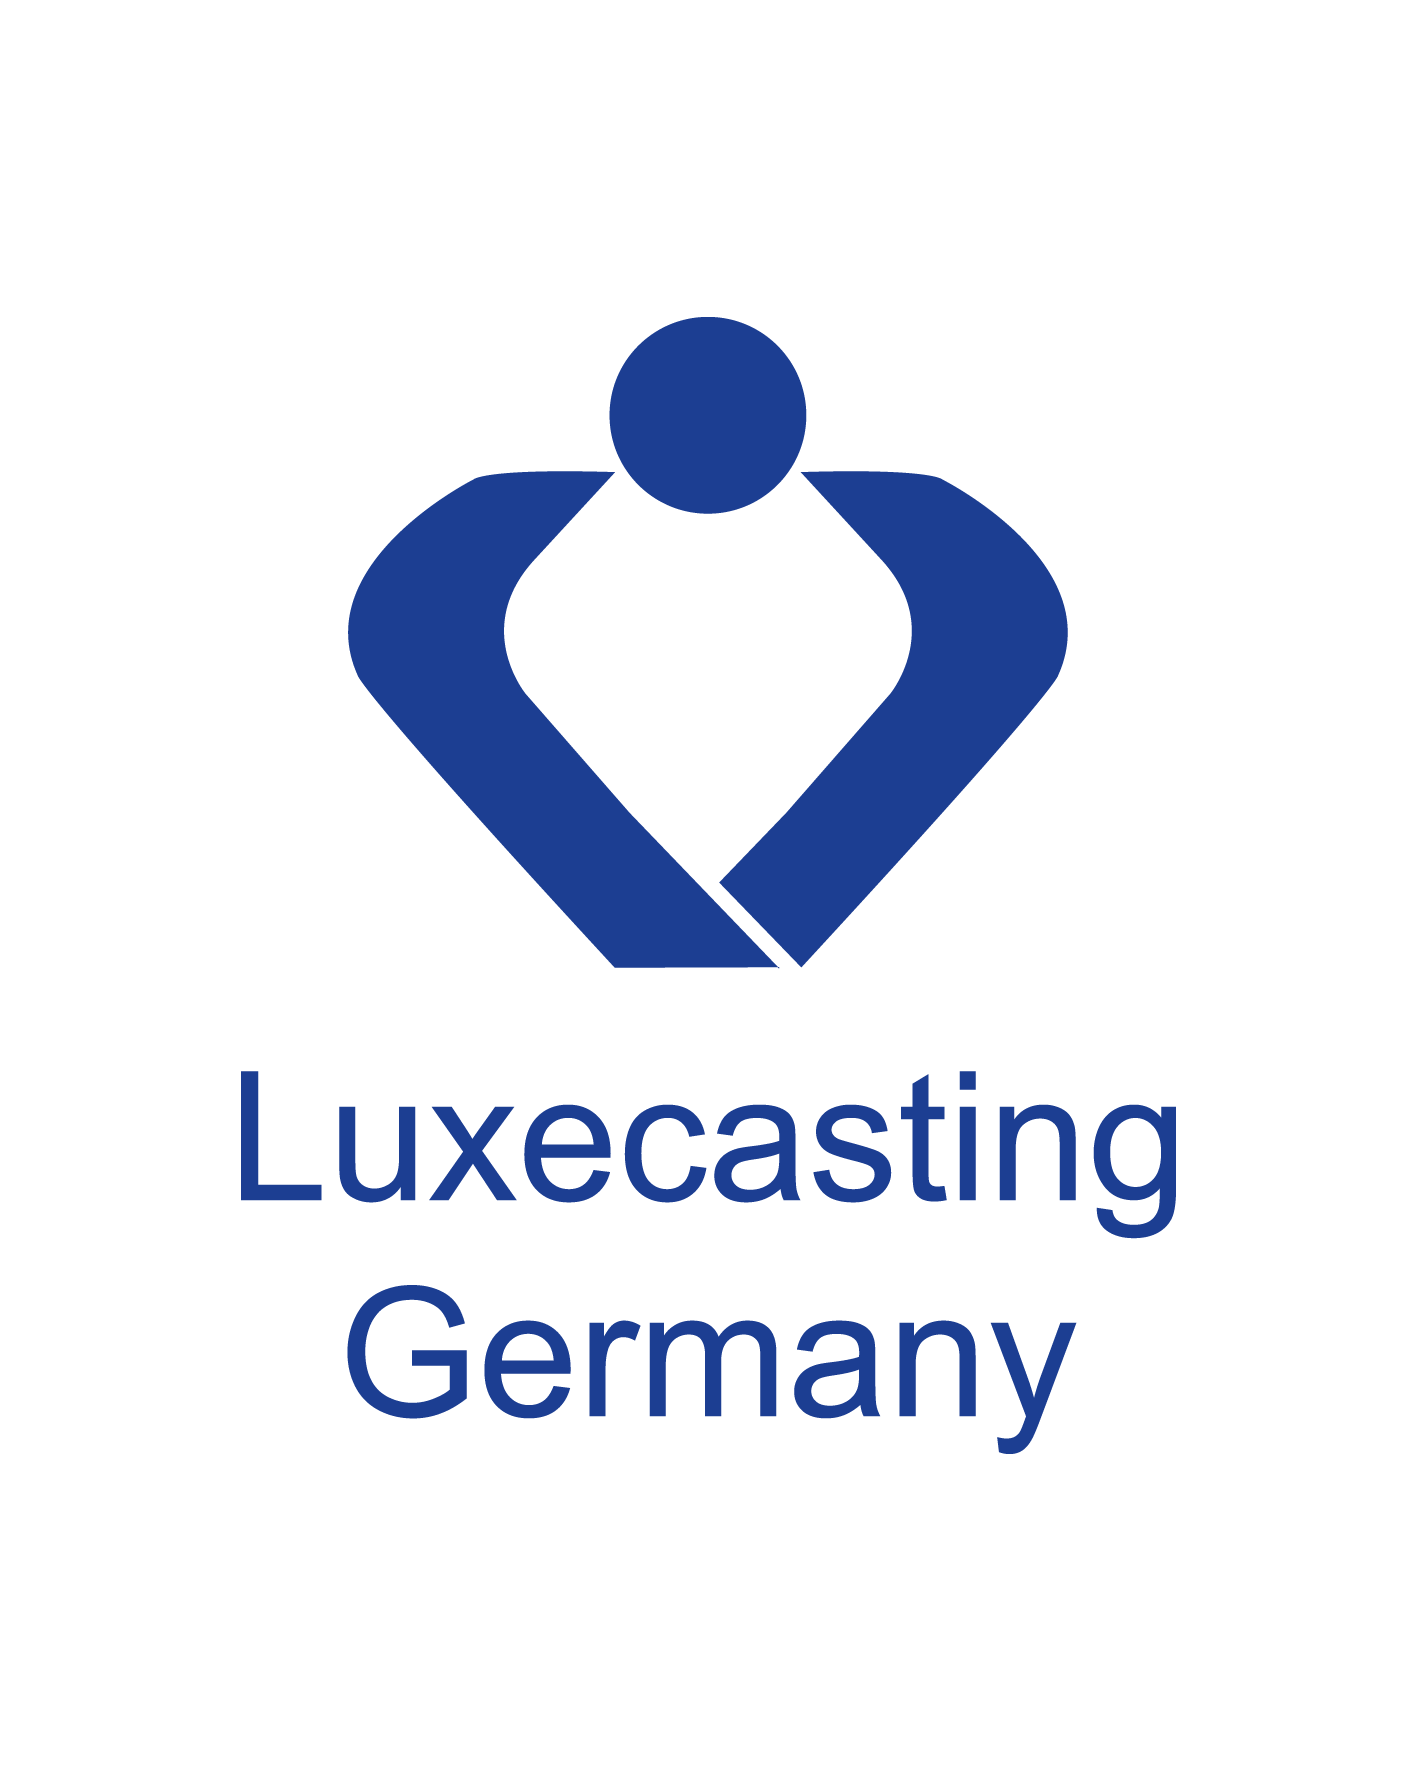 LuxecastingGermany_logo